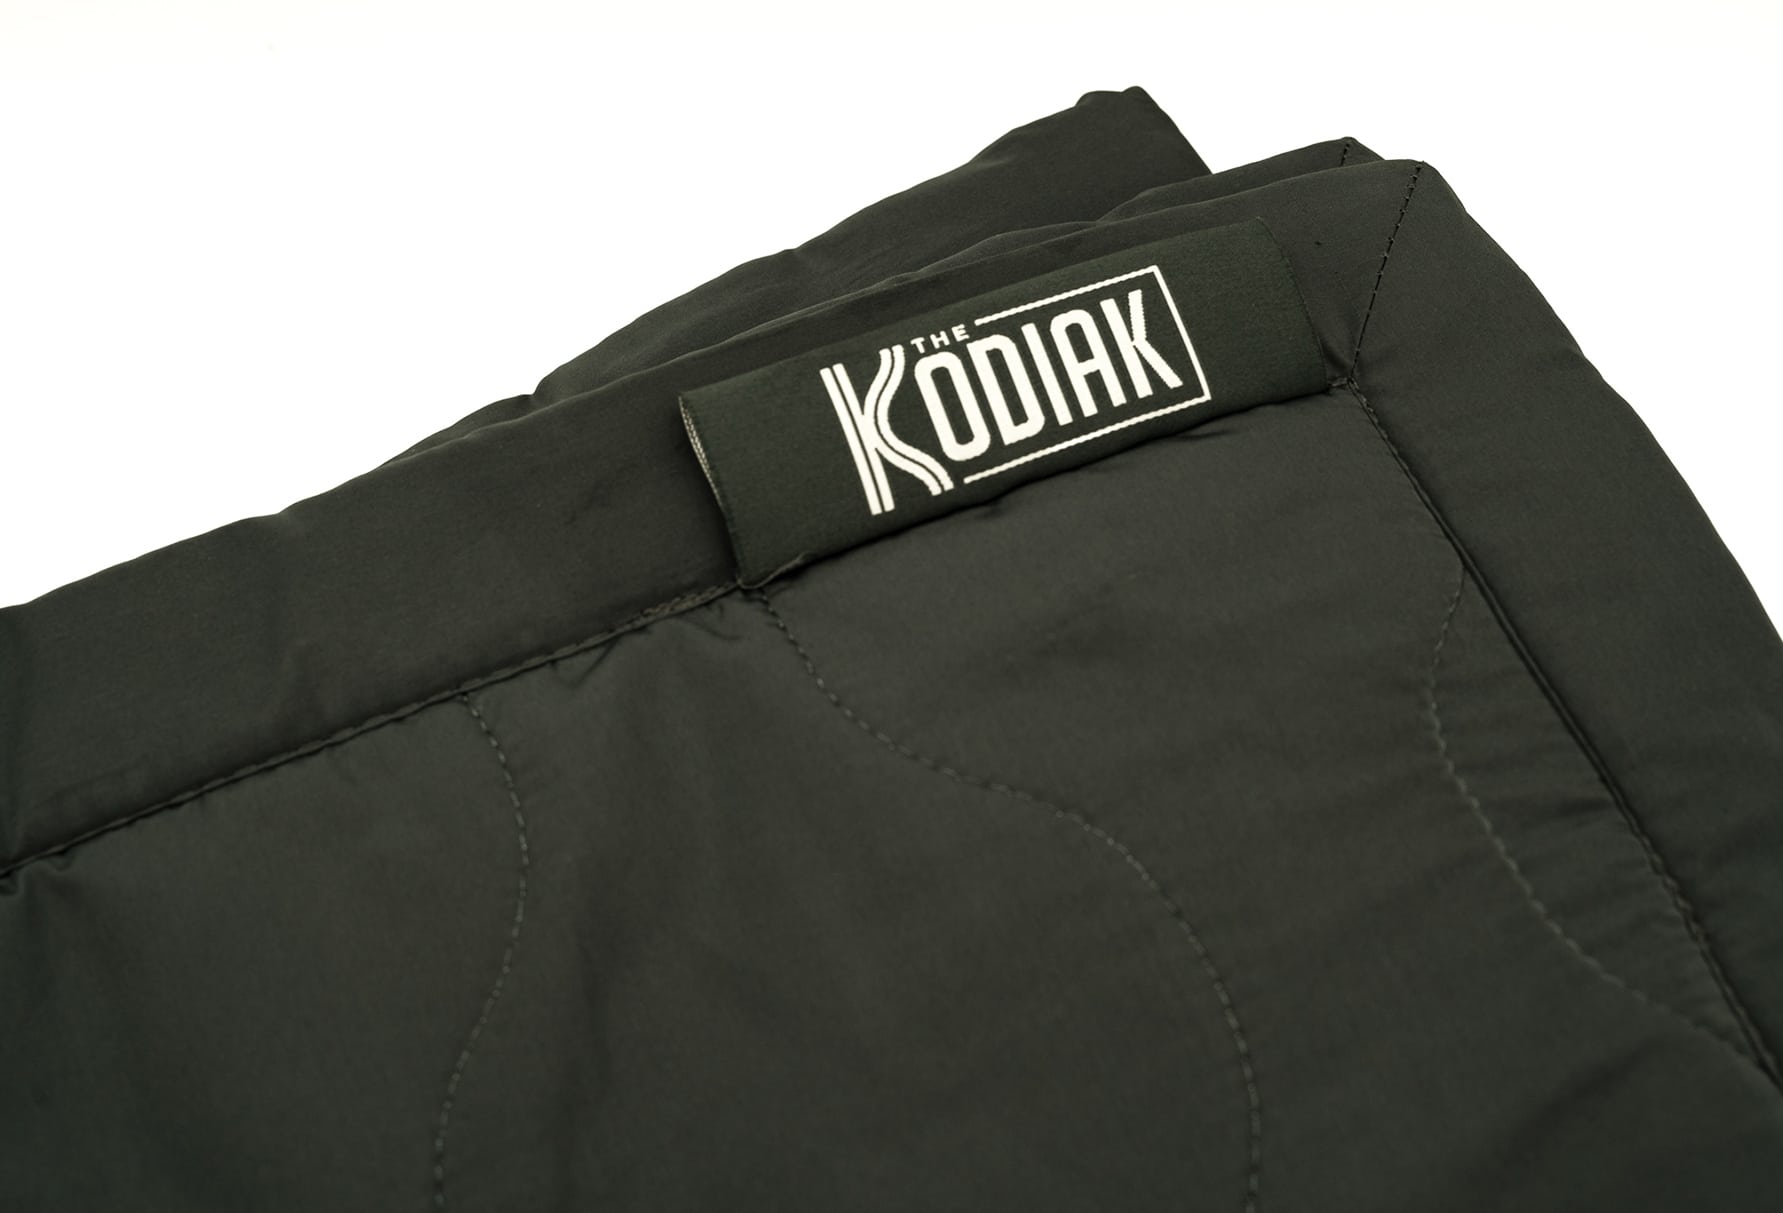 The Kodiak battery Powered Heating Blanket